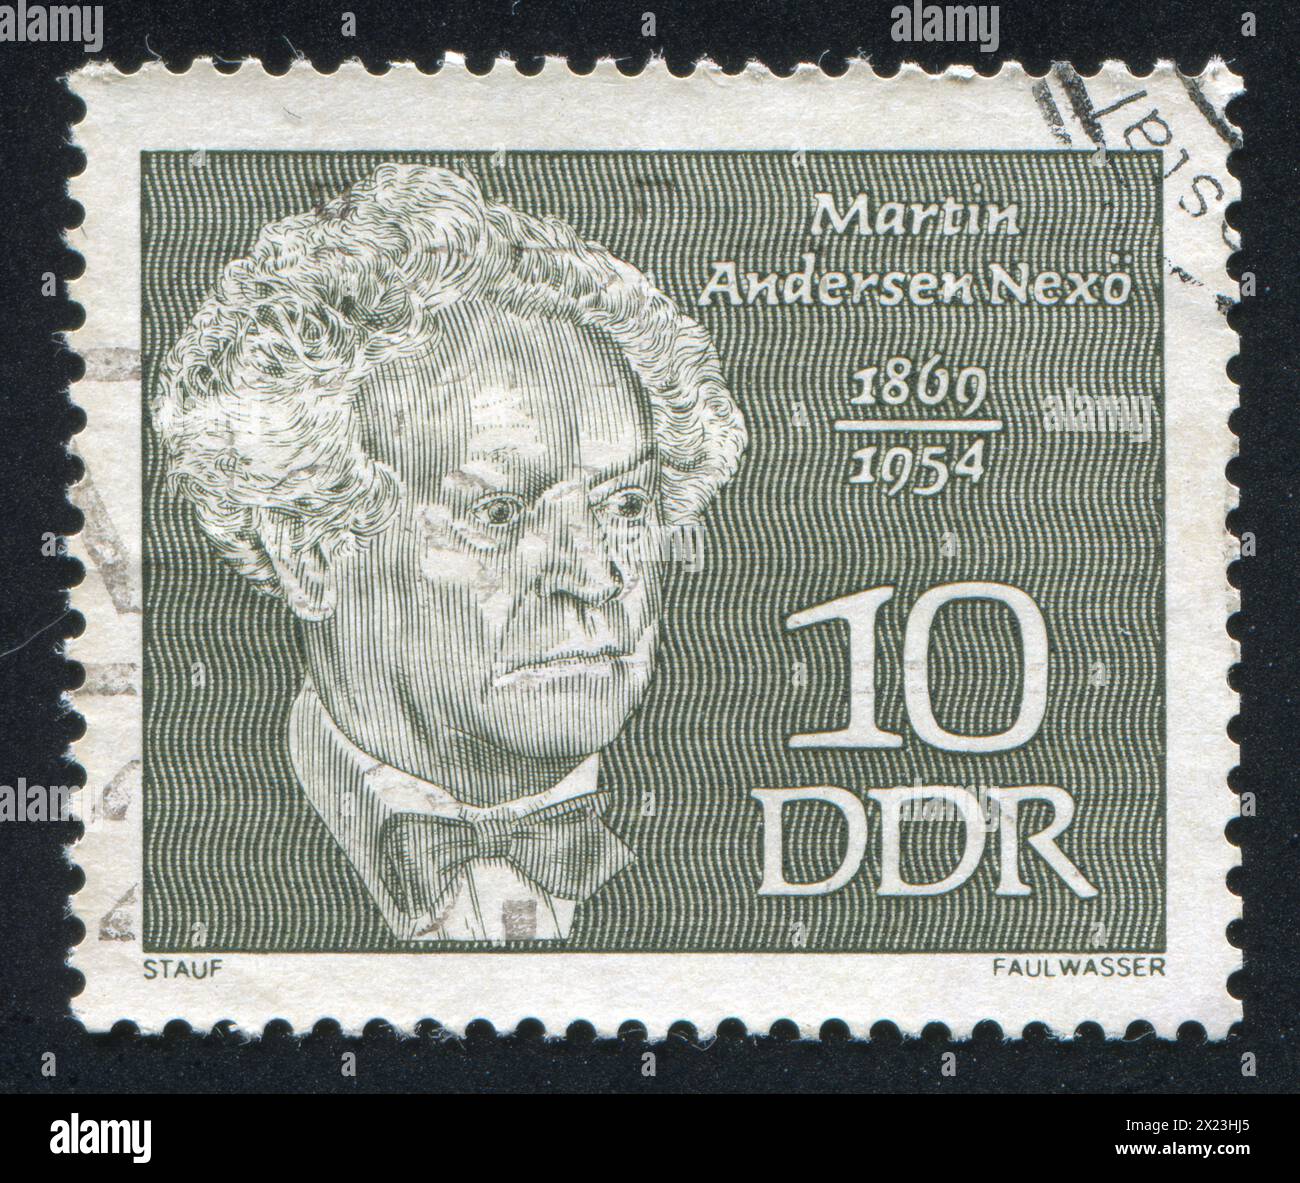 GERMANY - CIRCA 1969: stamp printed by Germany, shows Martin Andersen Nexo, Danish Writer, circa 1969 Stock Photo